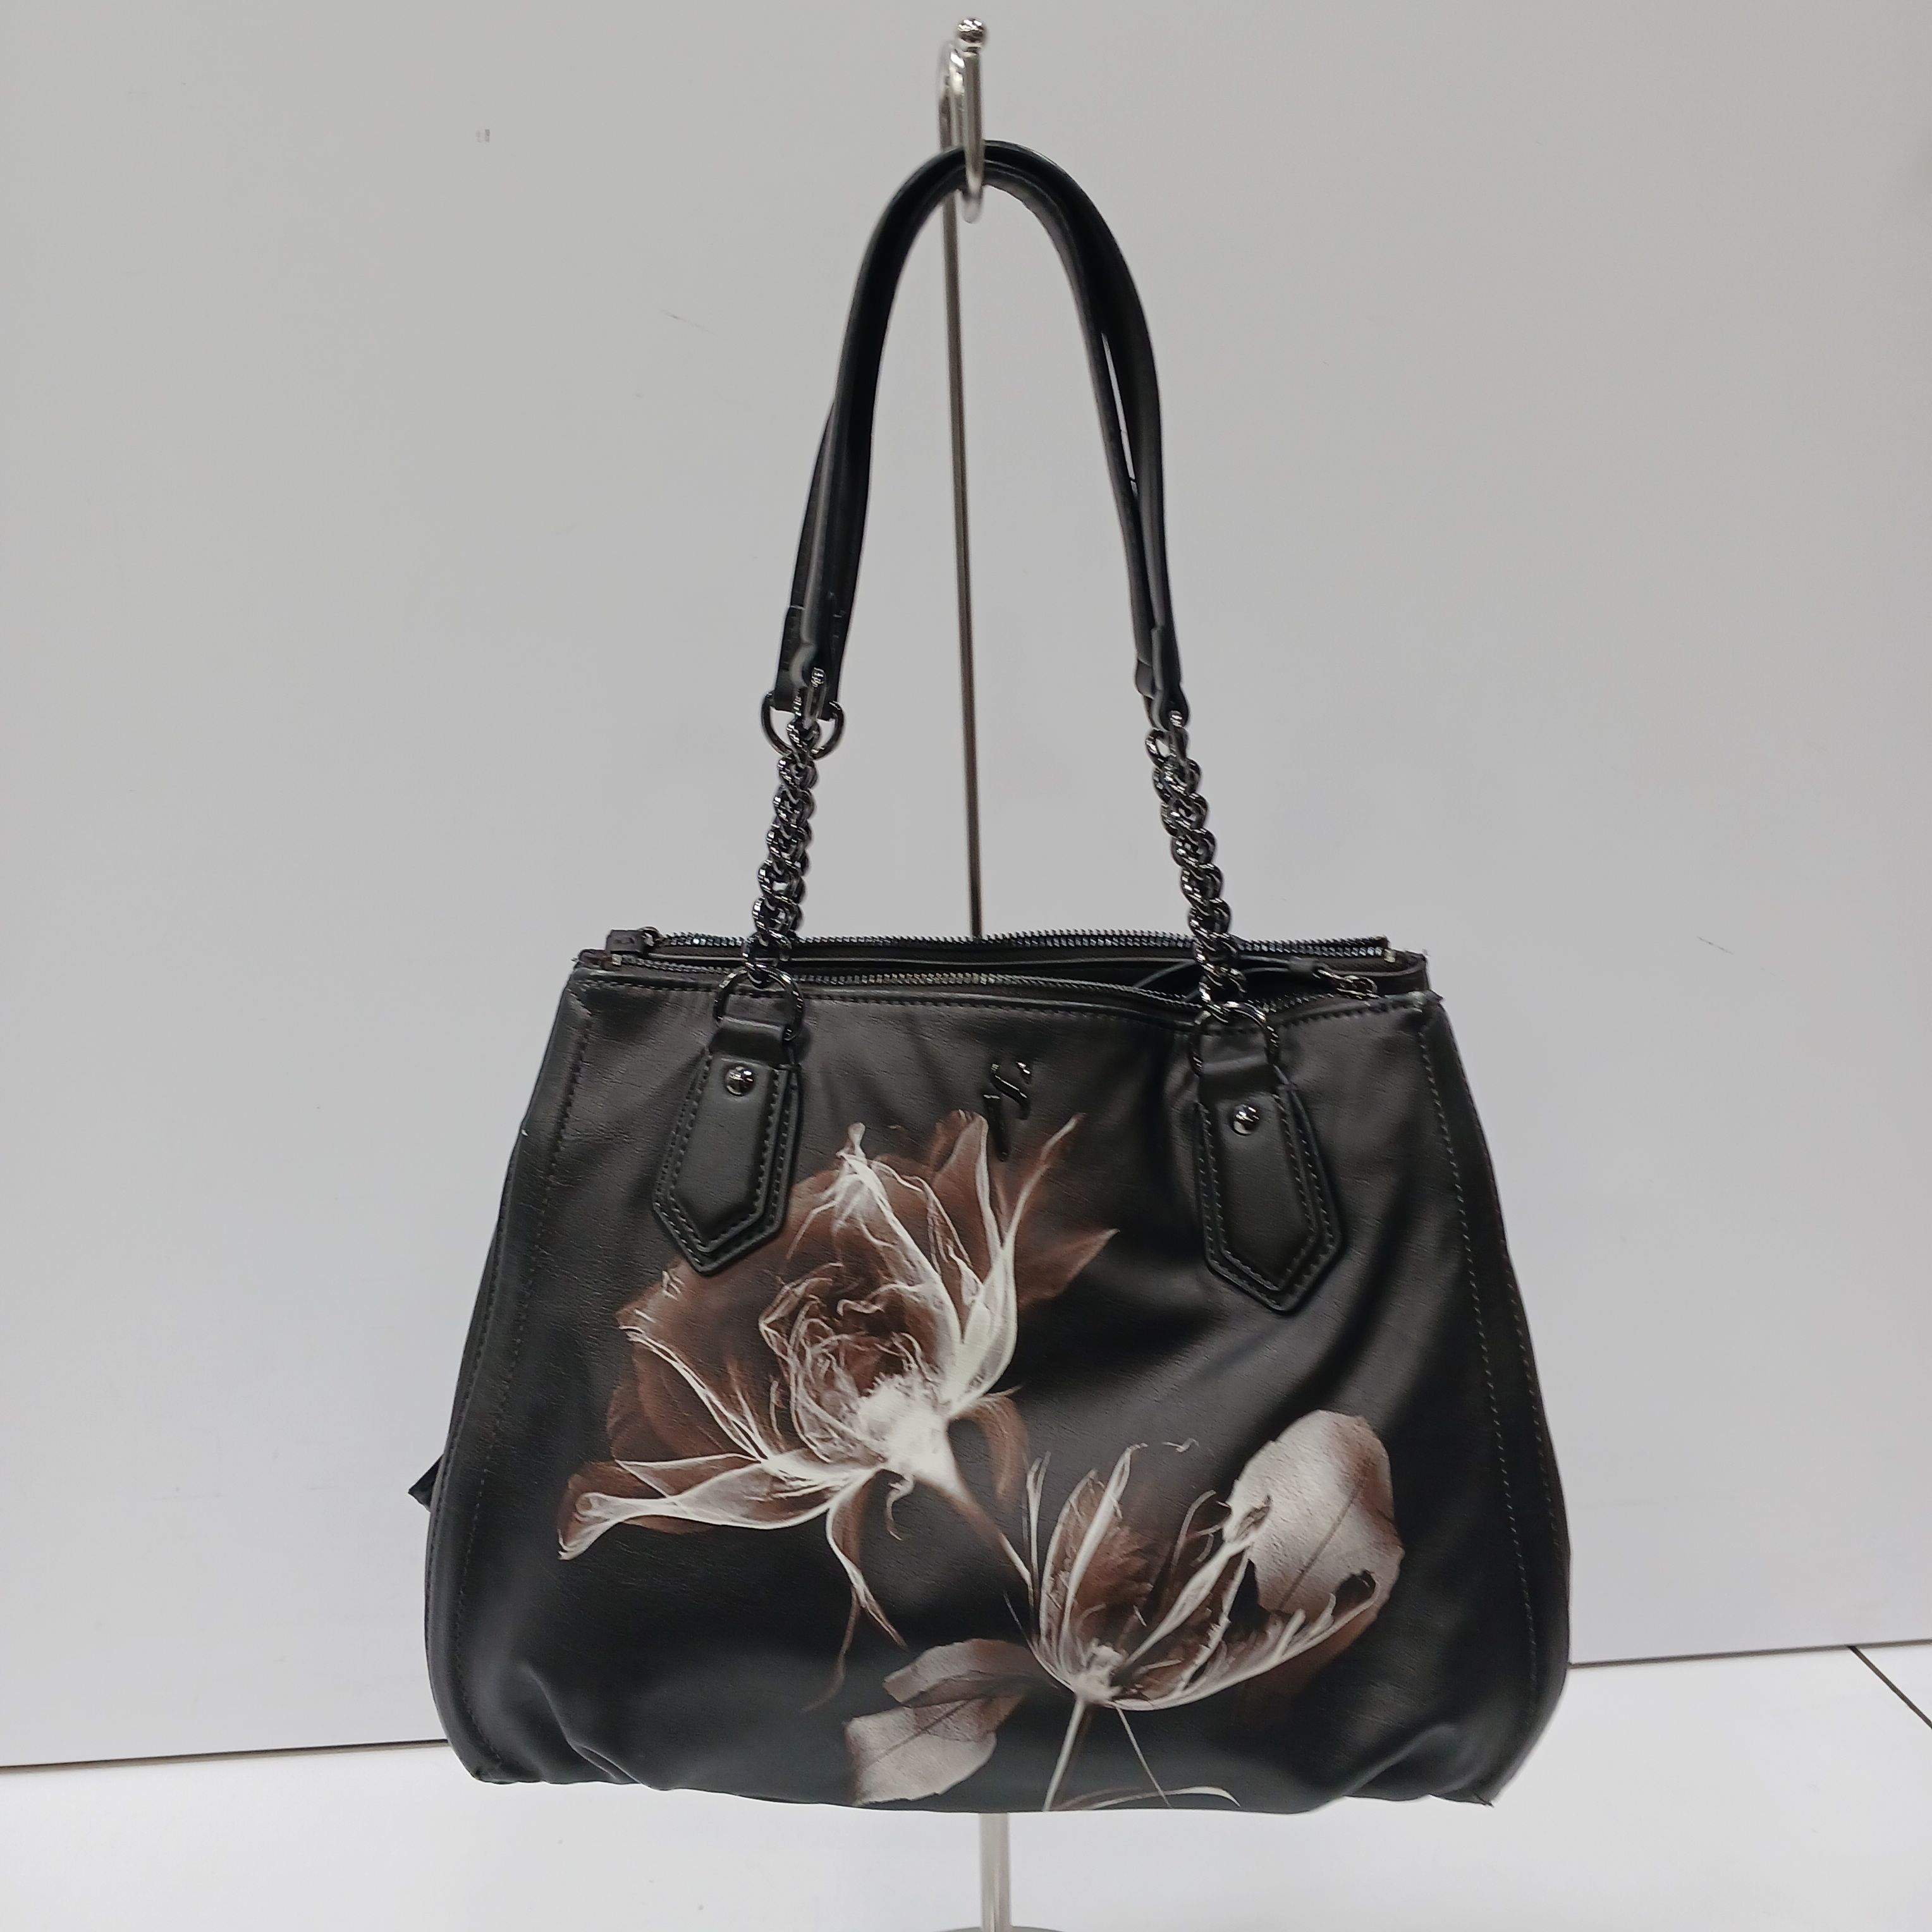 Simply Vera Vera Wang Snakeskin Vintage Handbags | Mercari